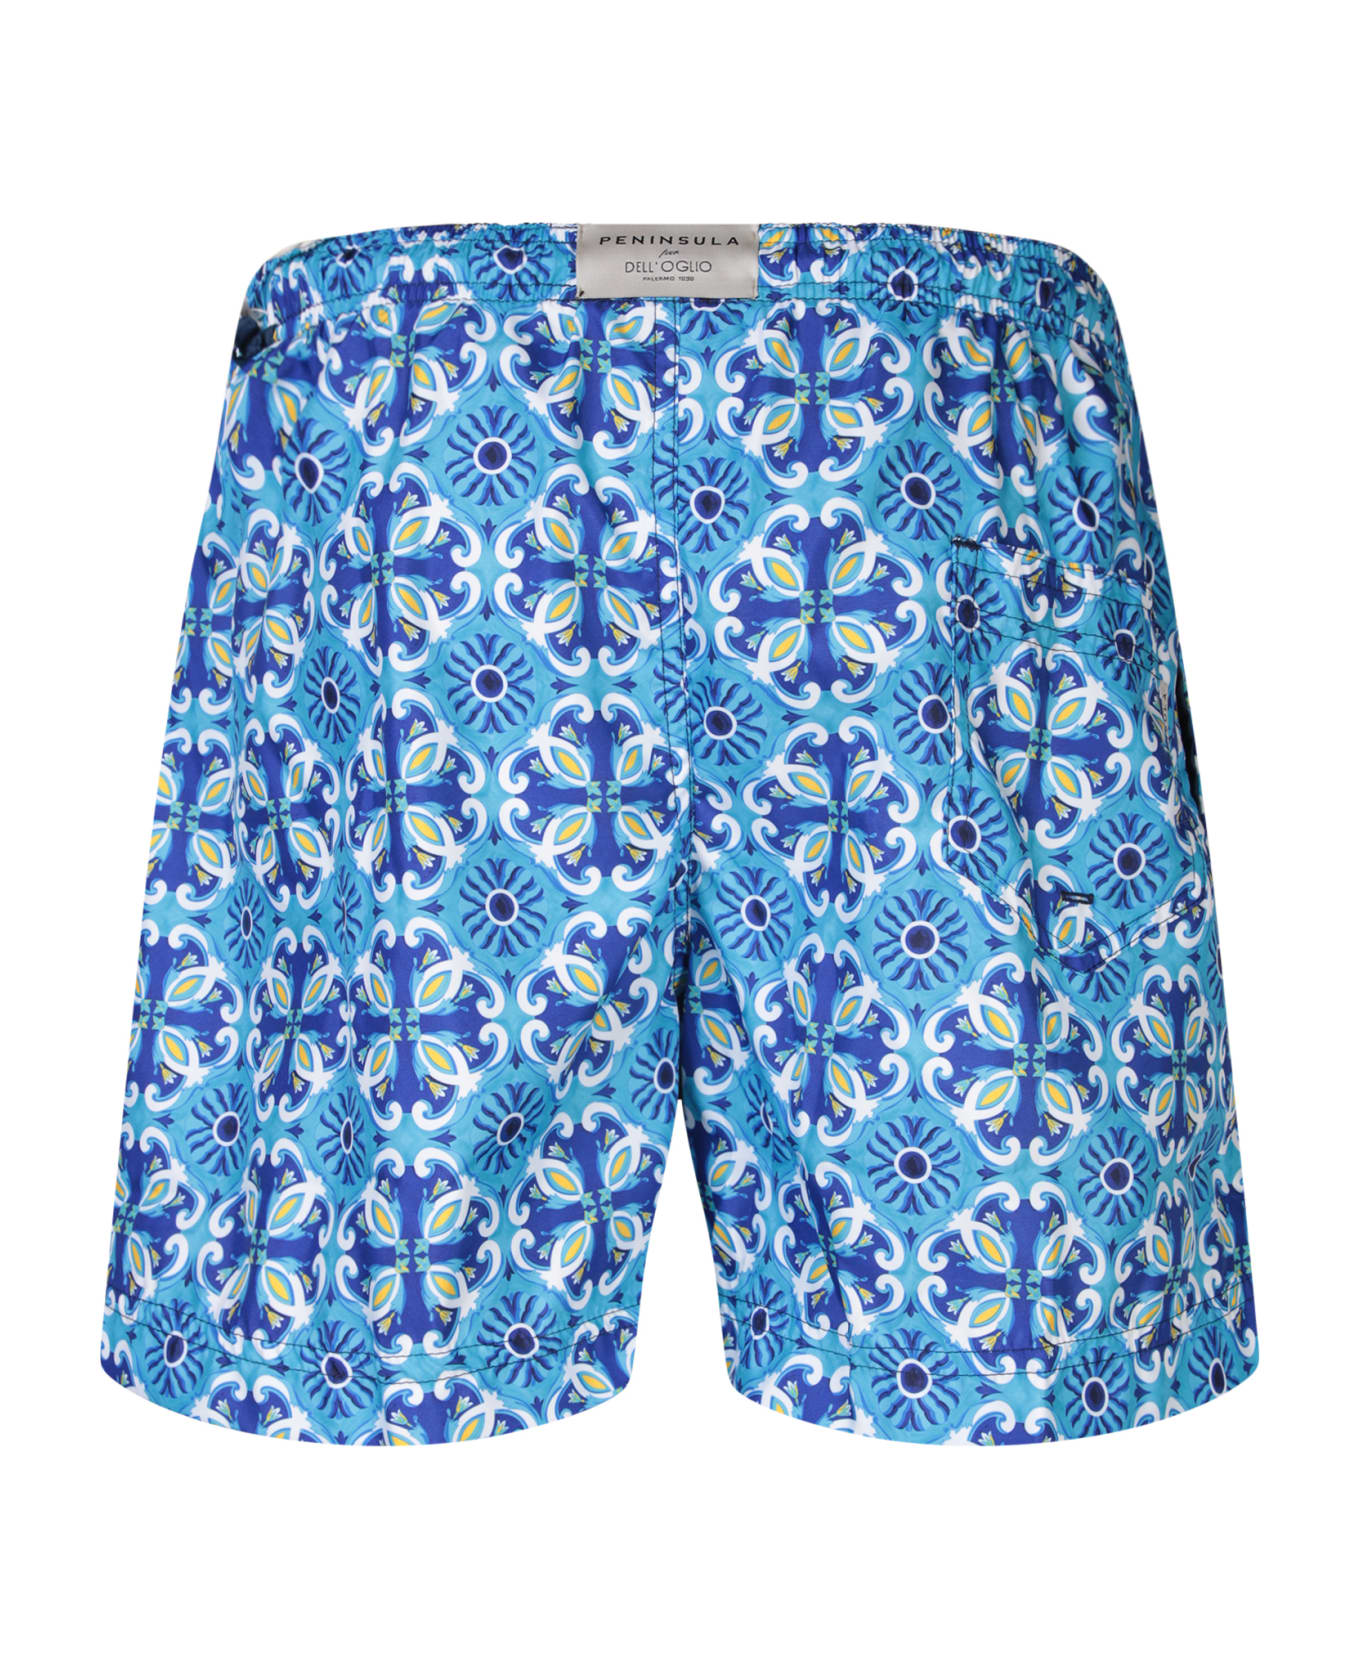 Peninsula Swimwear Patterned Blue Boxer Swim Shorts - Blue 水着